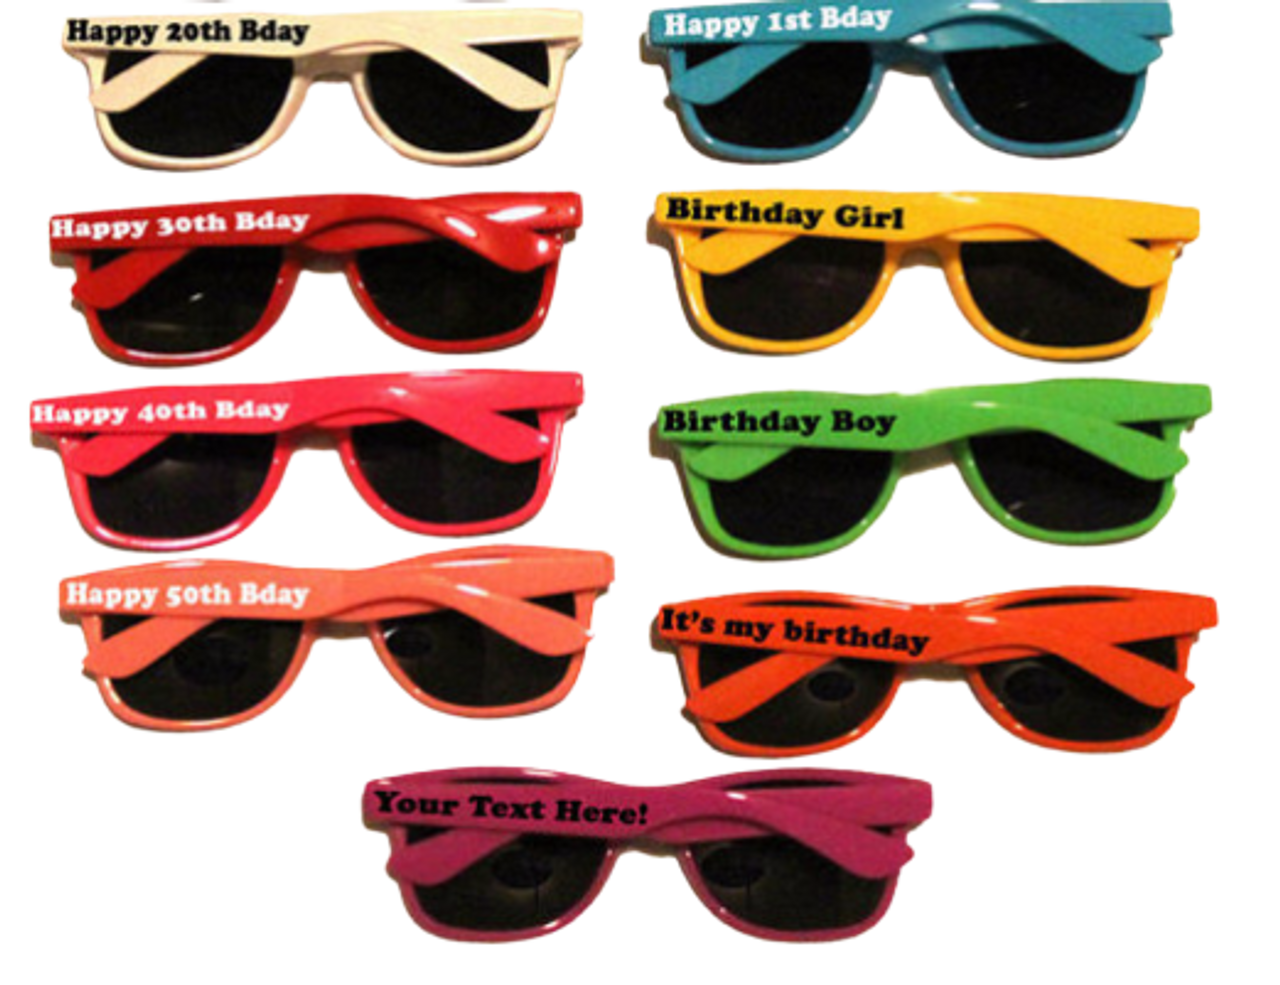 Bulk Wholesale Lot - Neon Party Sunglasses - Funny Party hats 